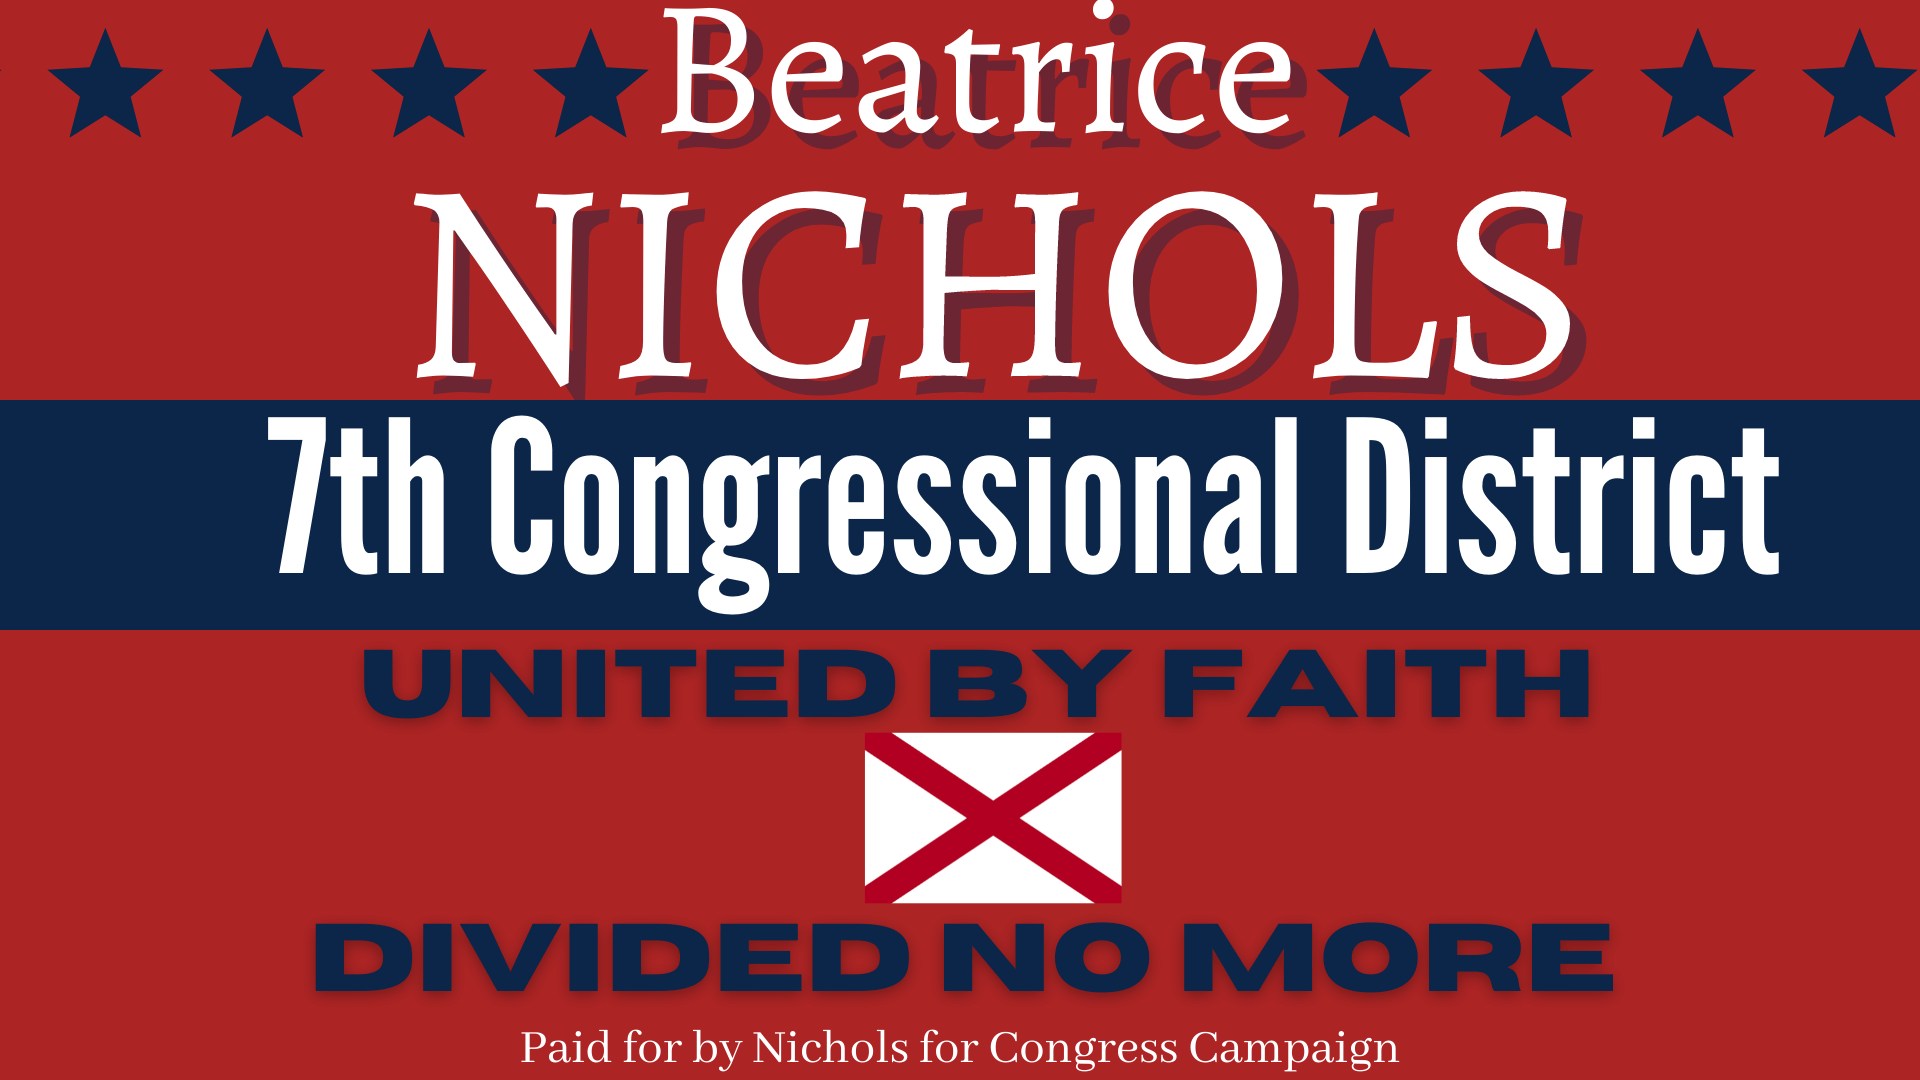 Beatrice nichols campaign banner